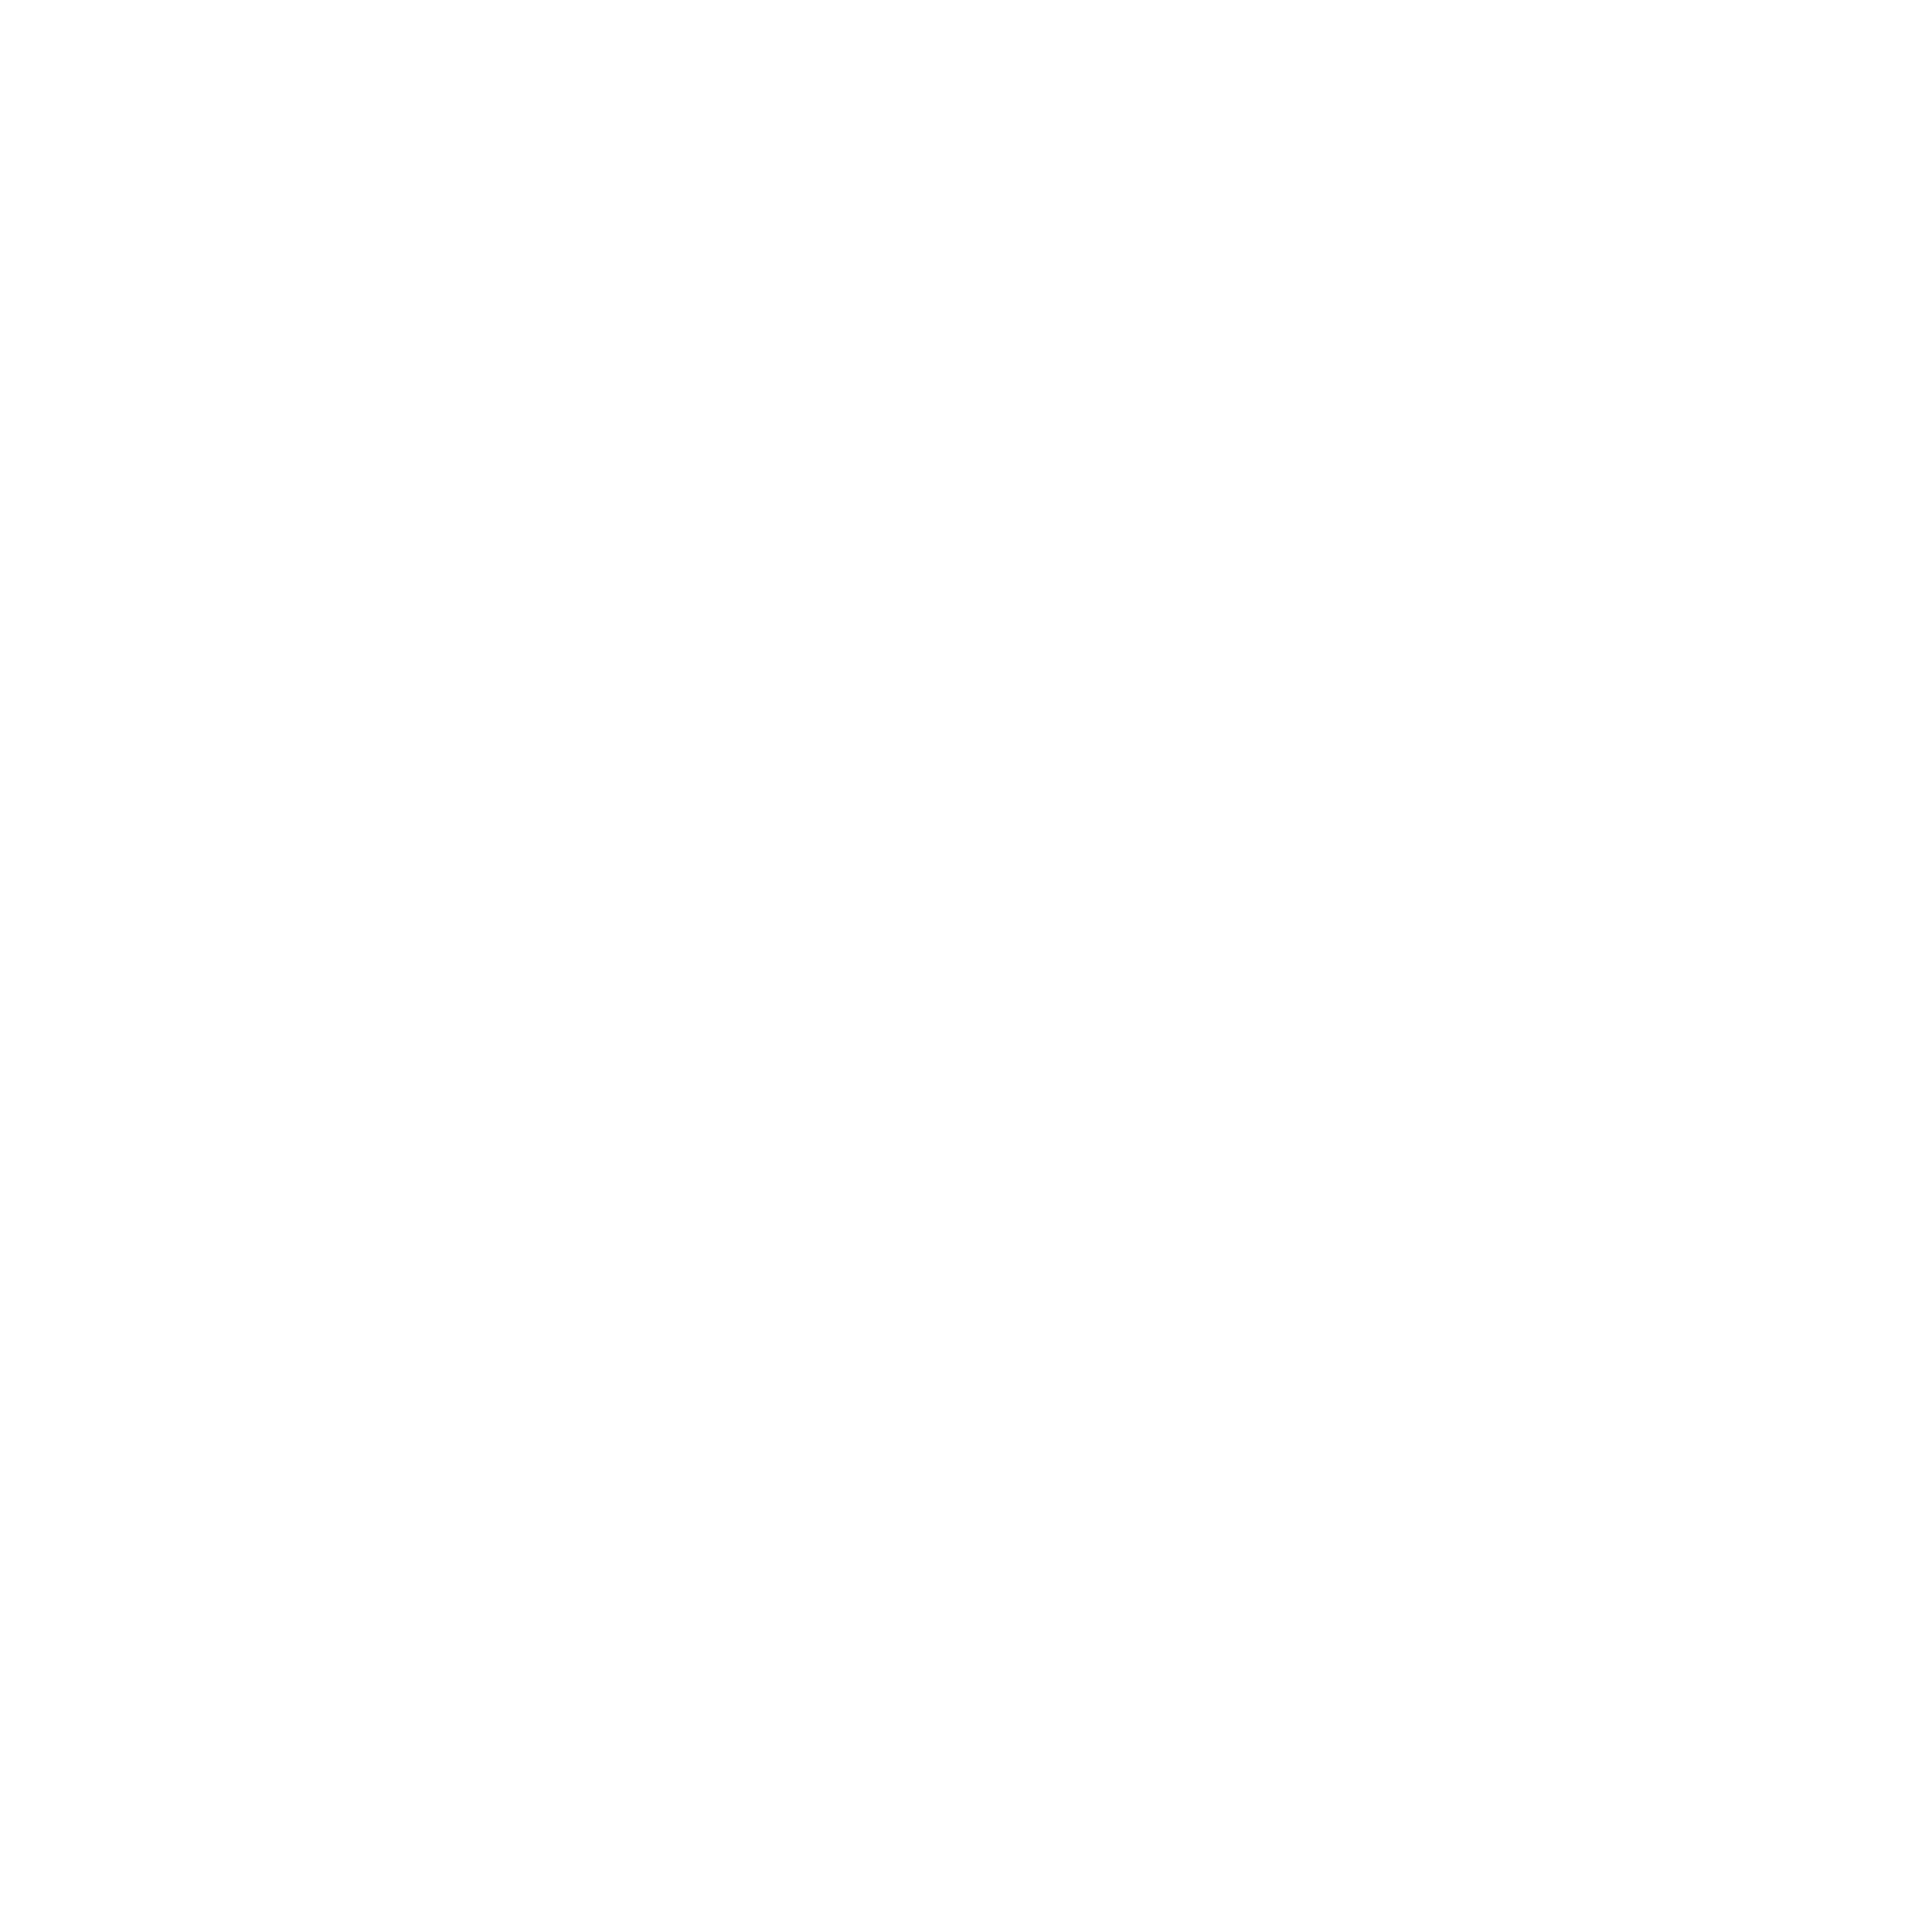 white X button to close modal